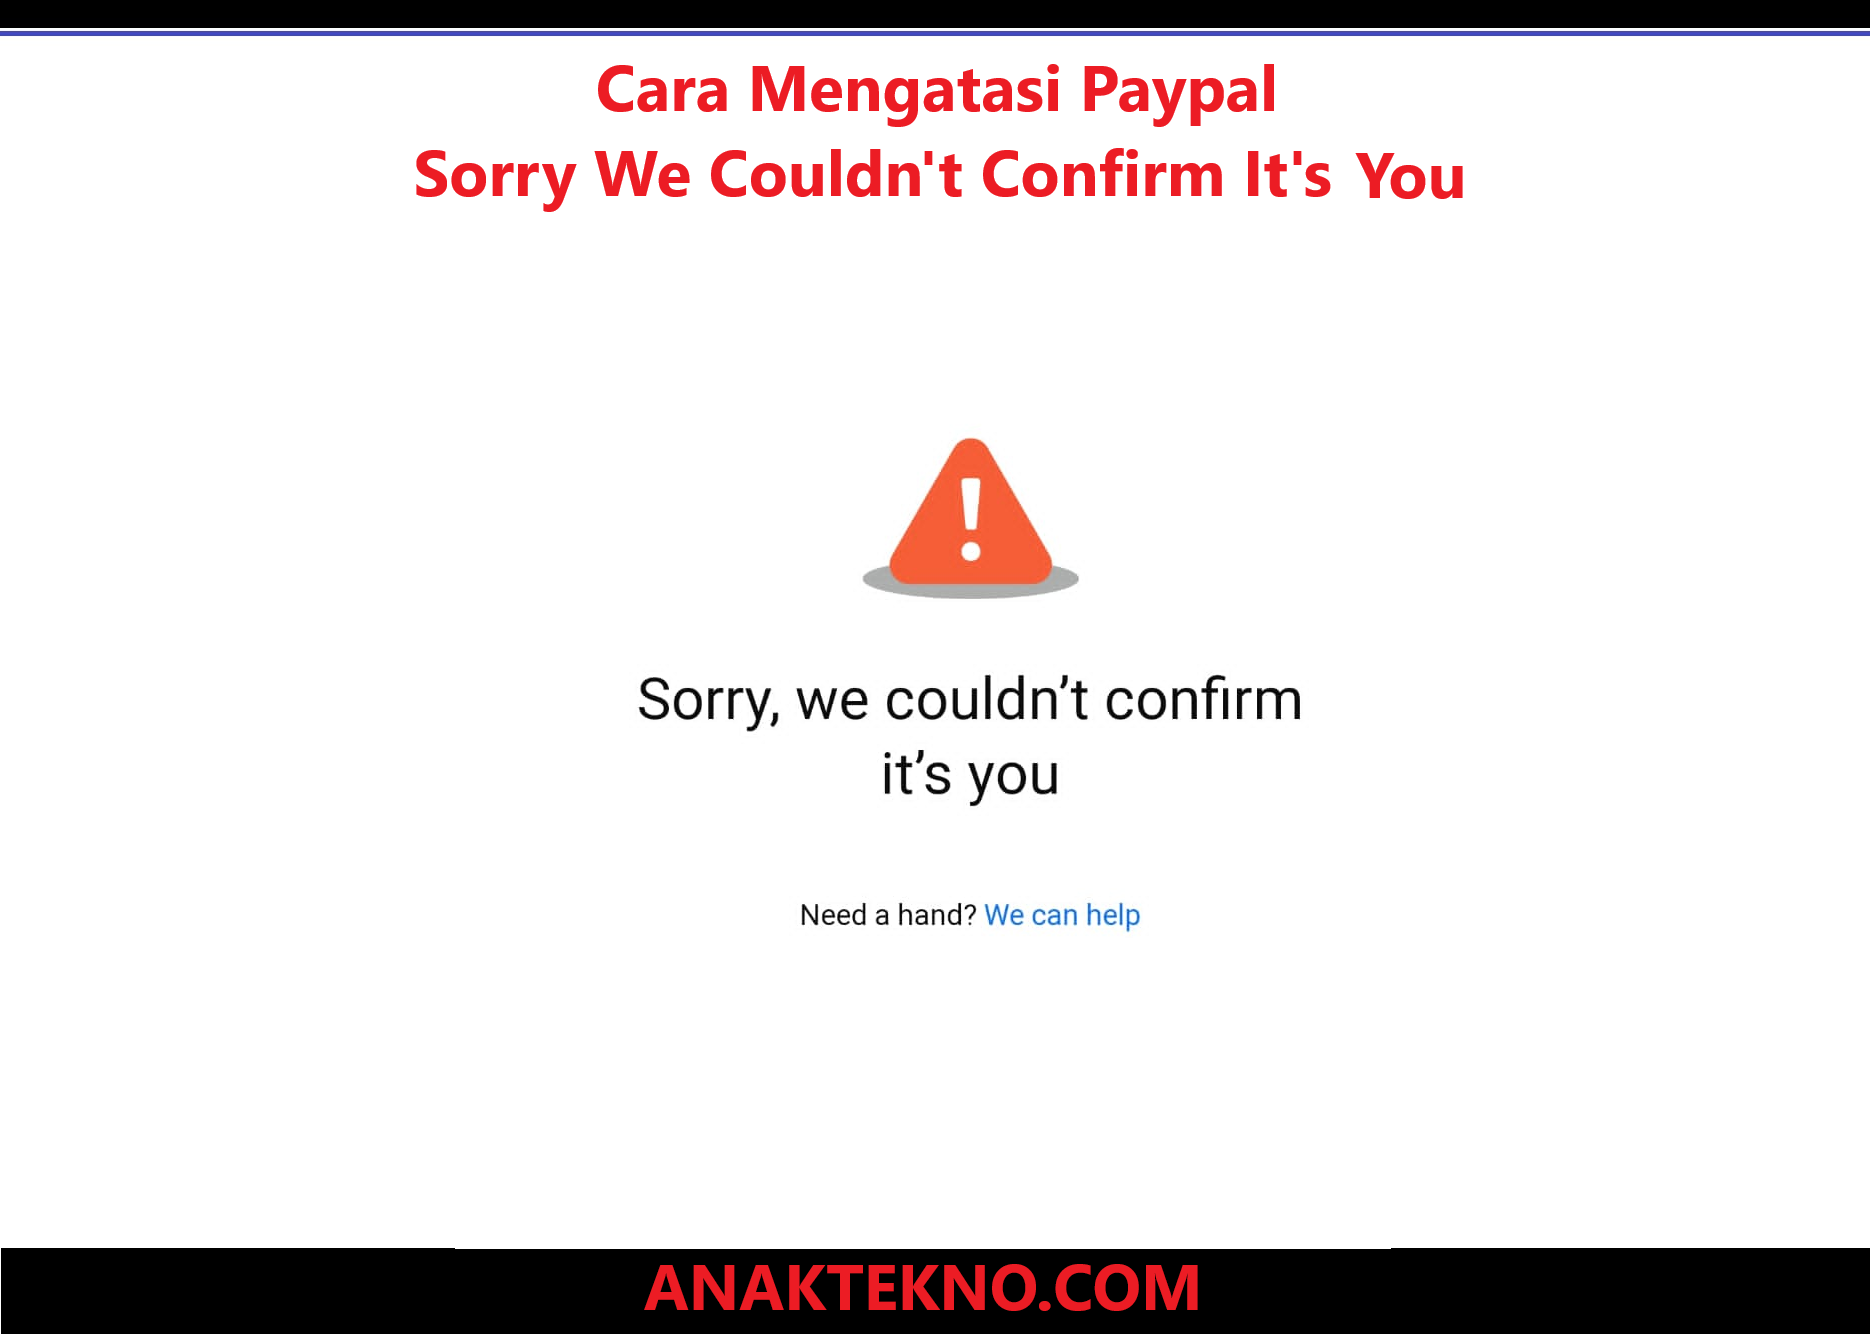 Cara Mengatasi Paypal Sorry We Couldn't Confirm It's You